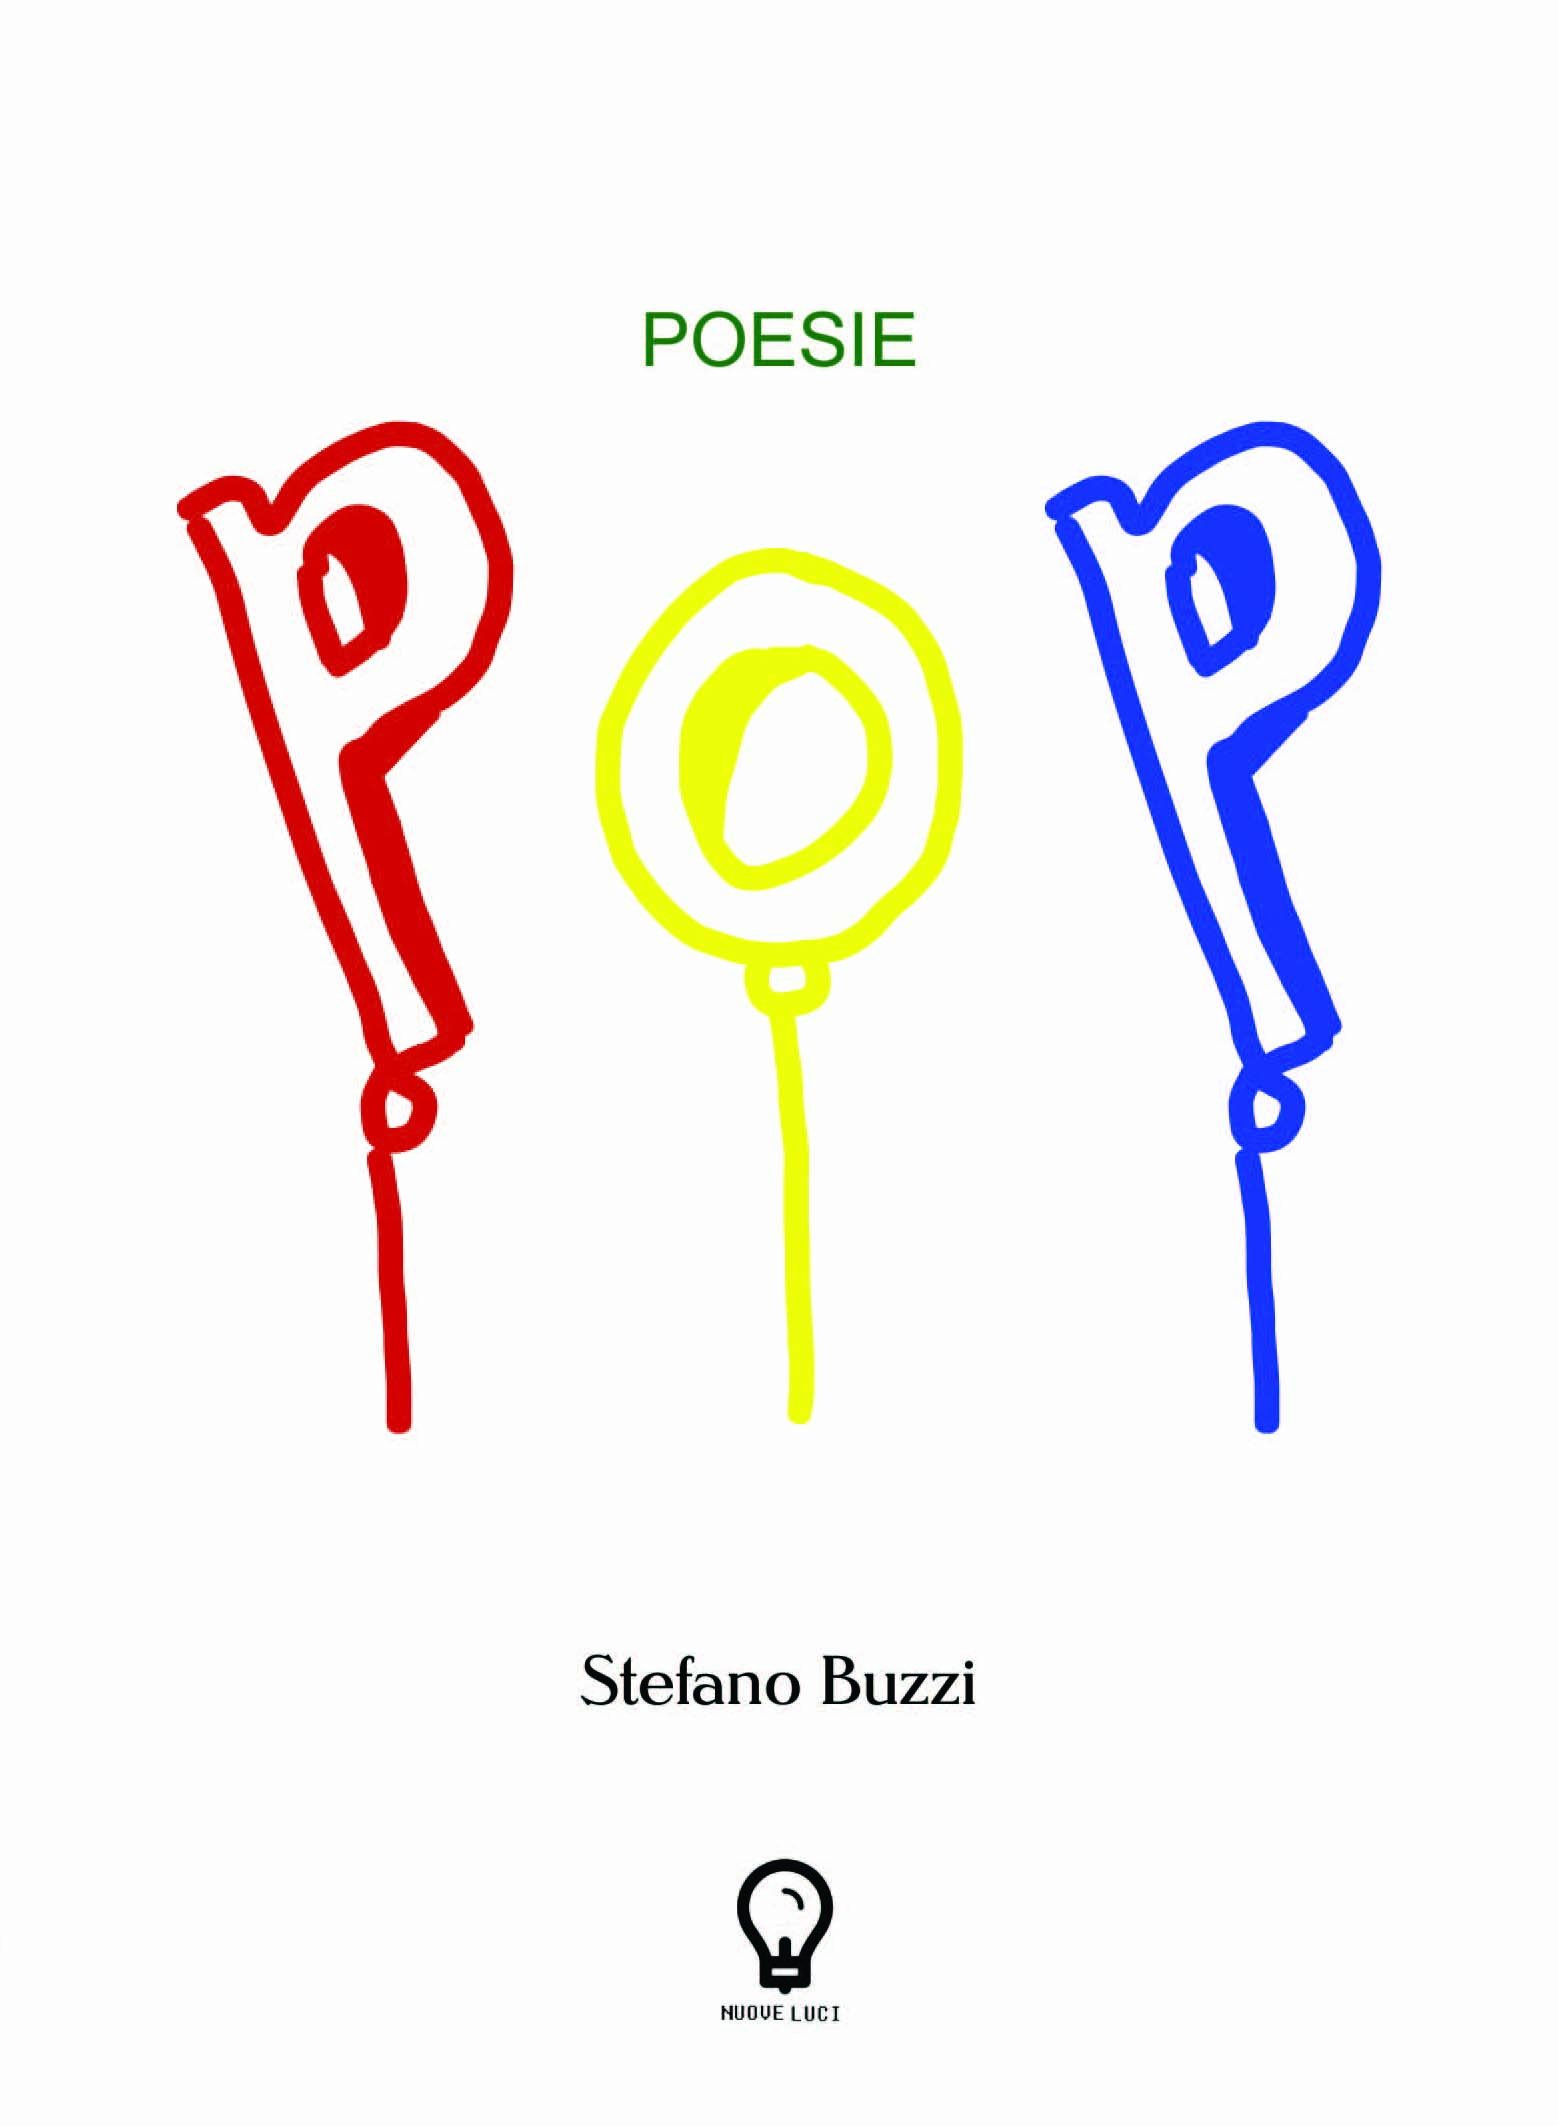 Stefano Buzzi: "Poesie POP"